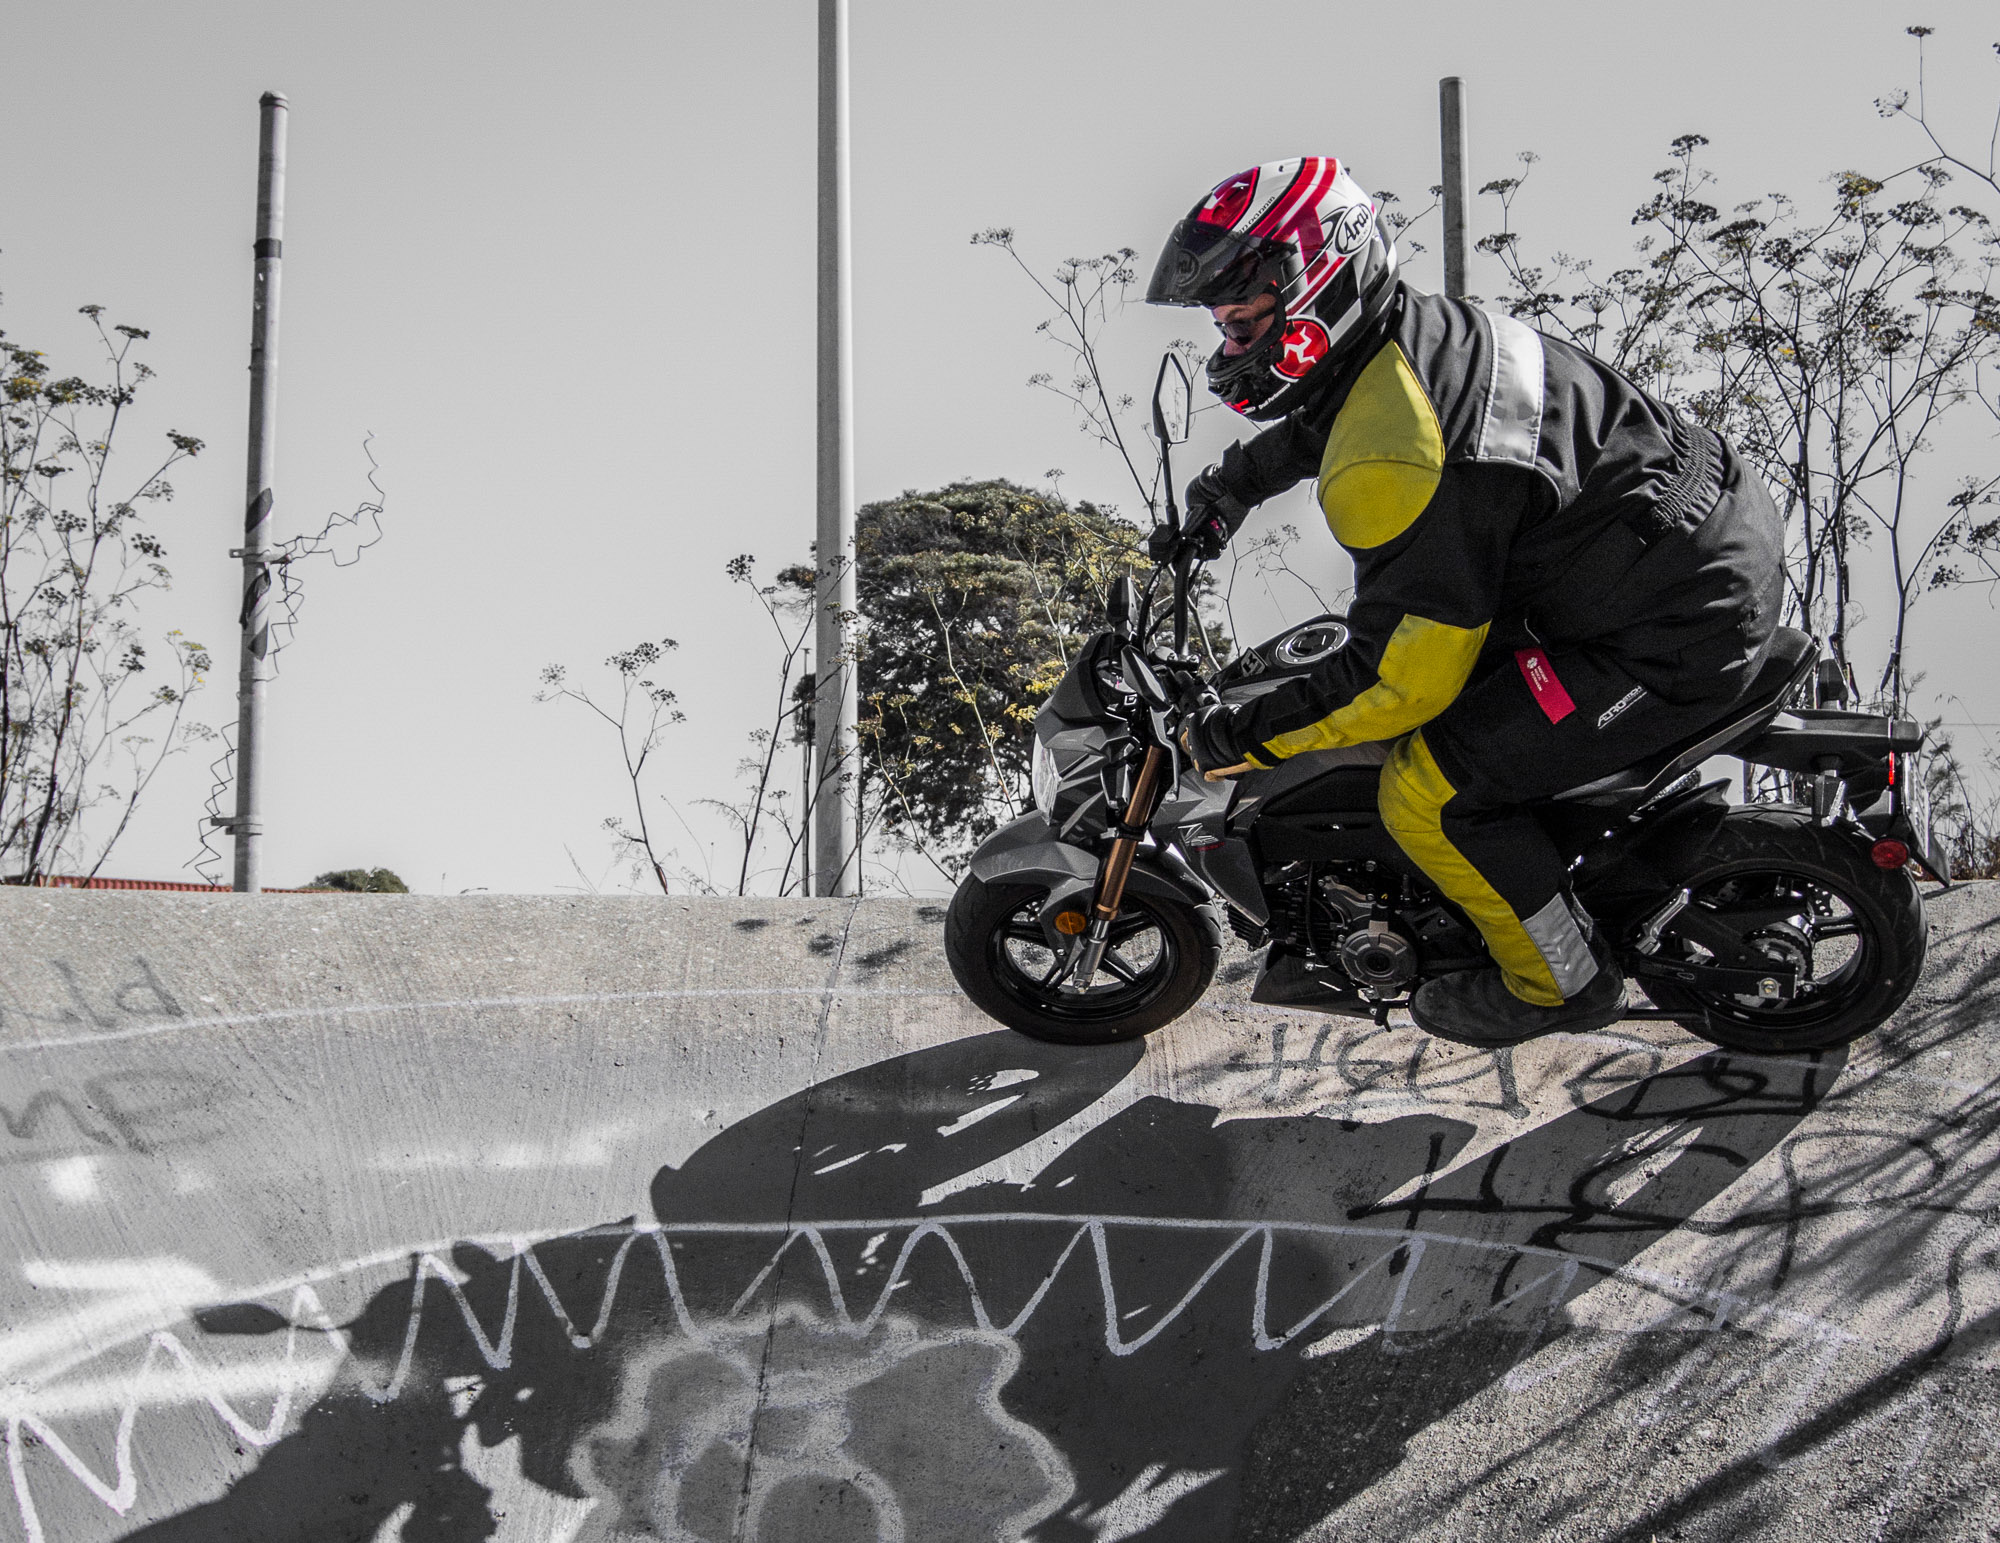 Surj Gish riding the wall of a secret spot on a Kawasaki Z125.